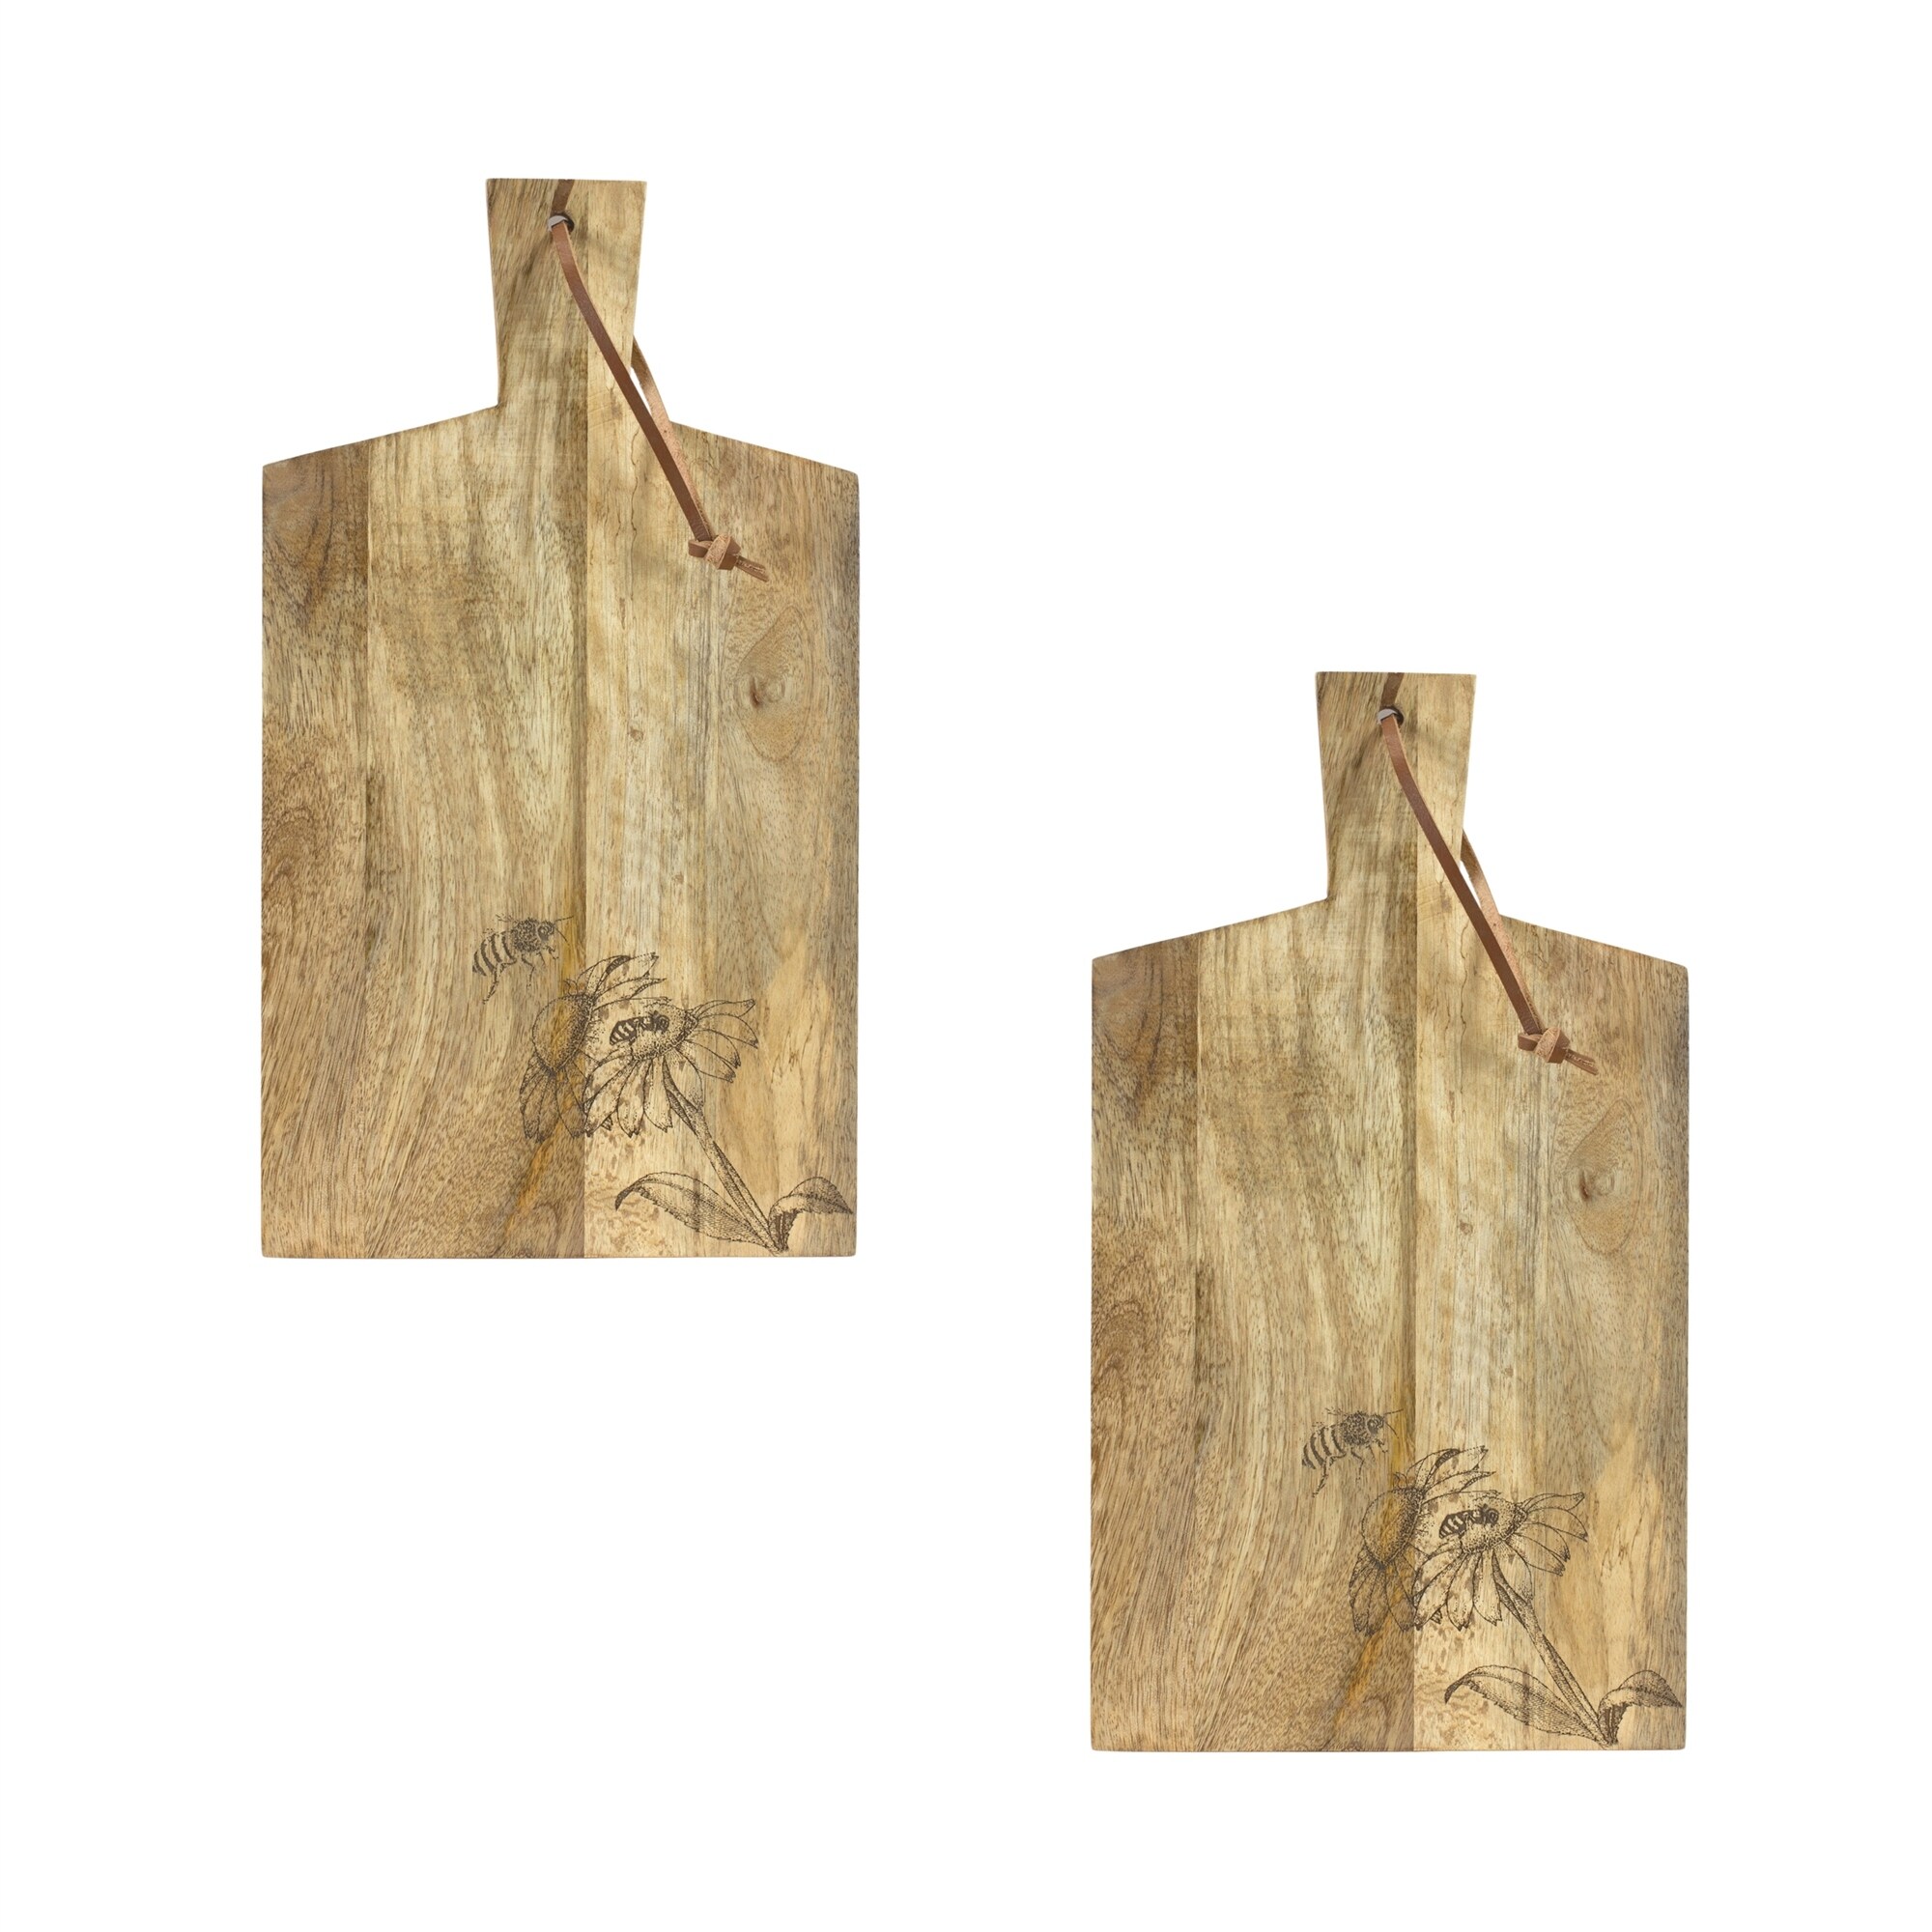 Wooden Chopping Board, Mango Wood Cutting Board